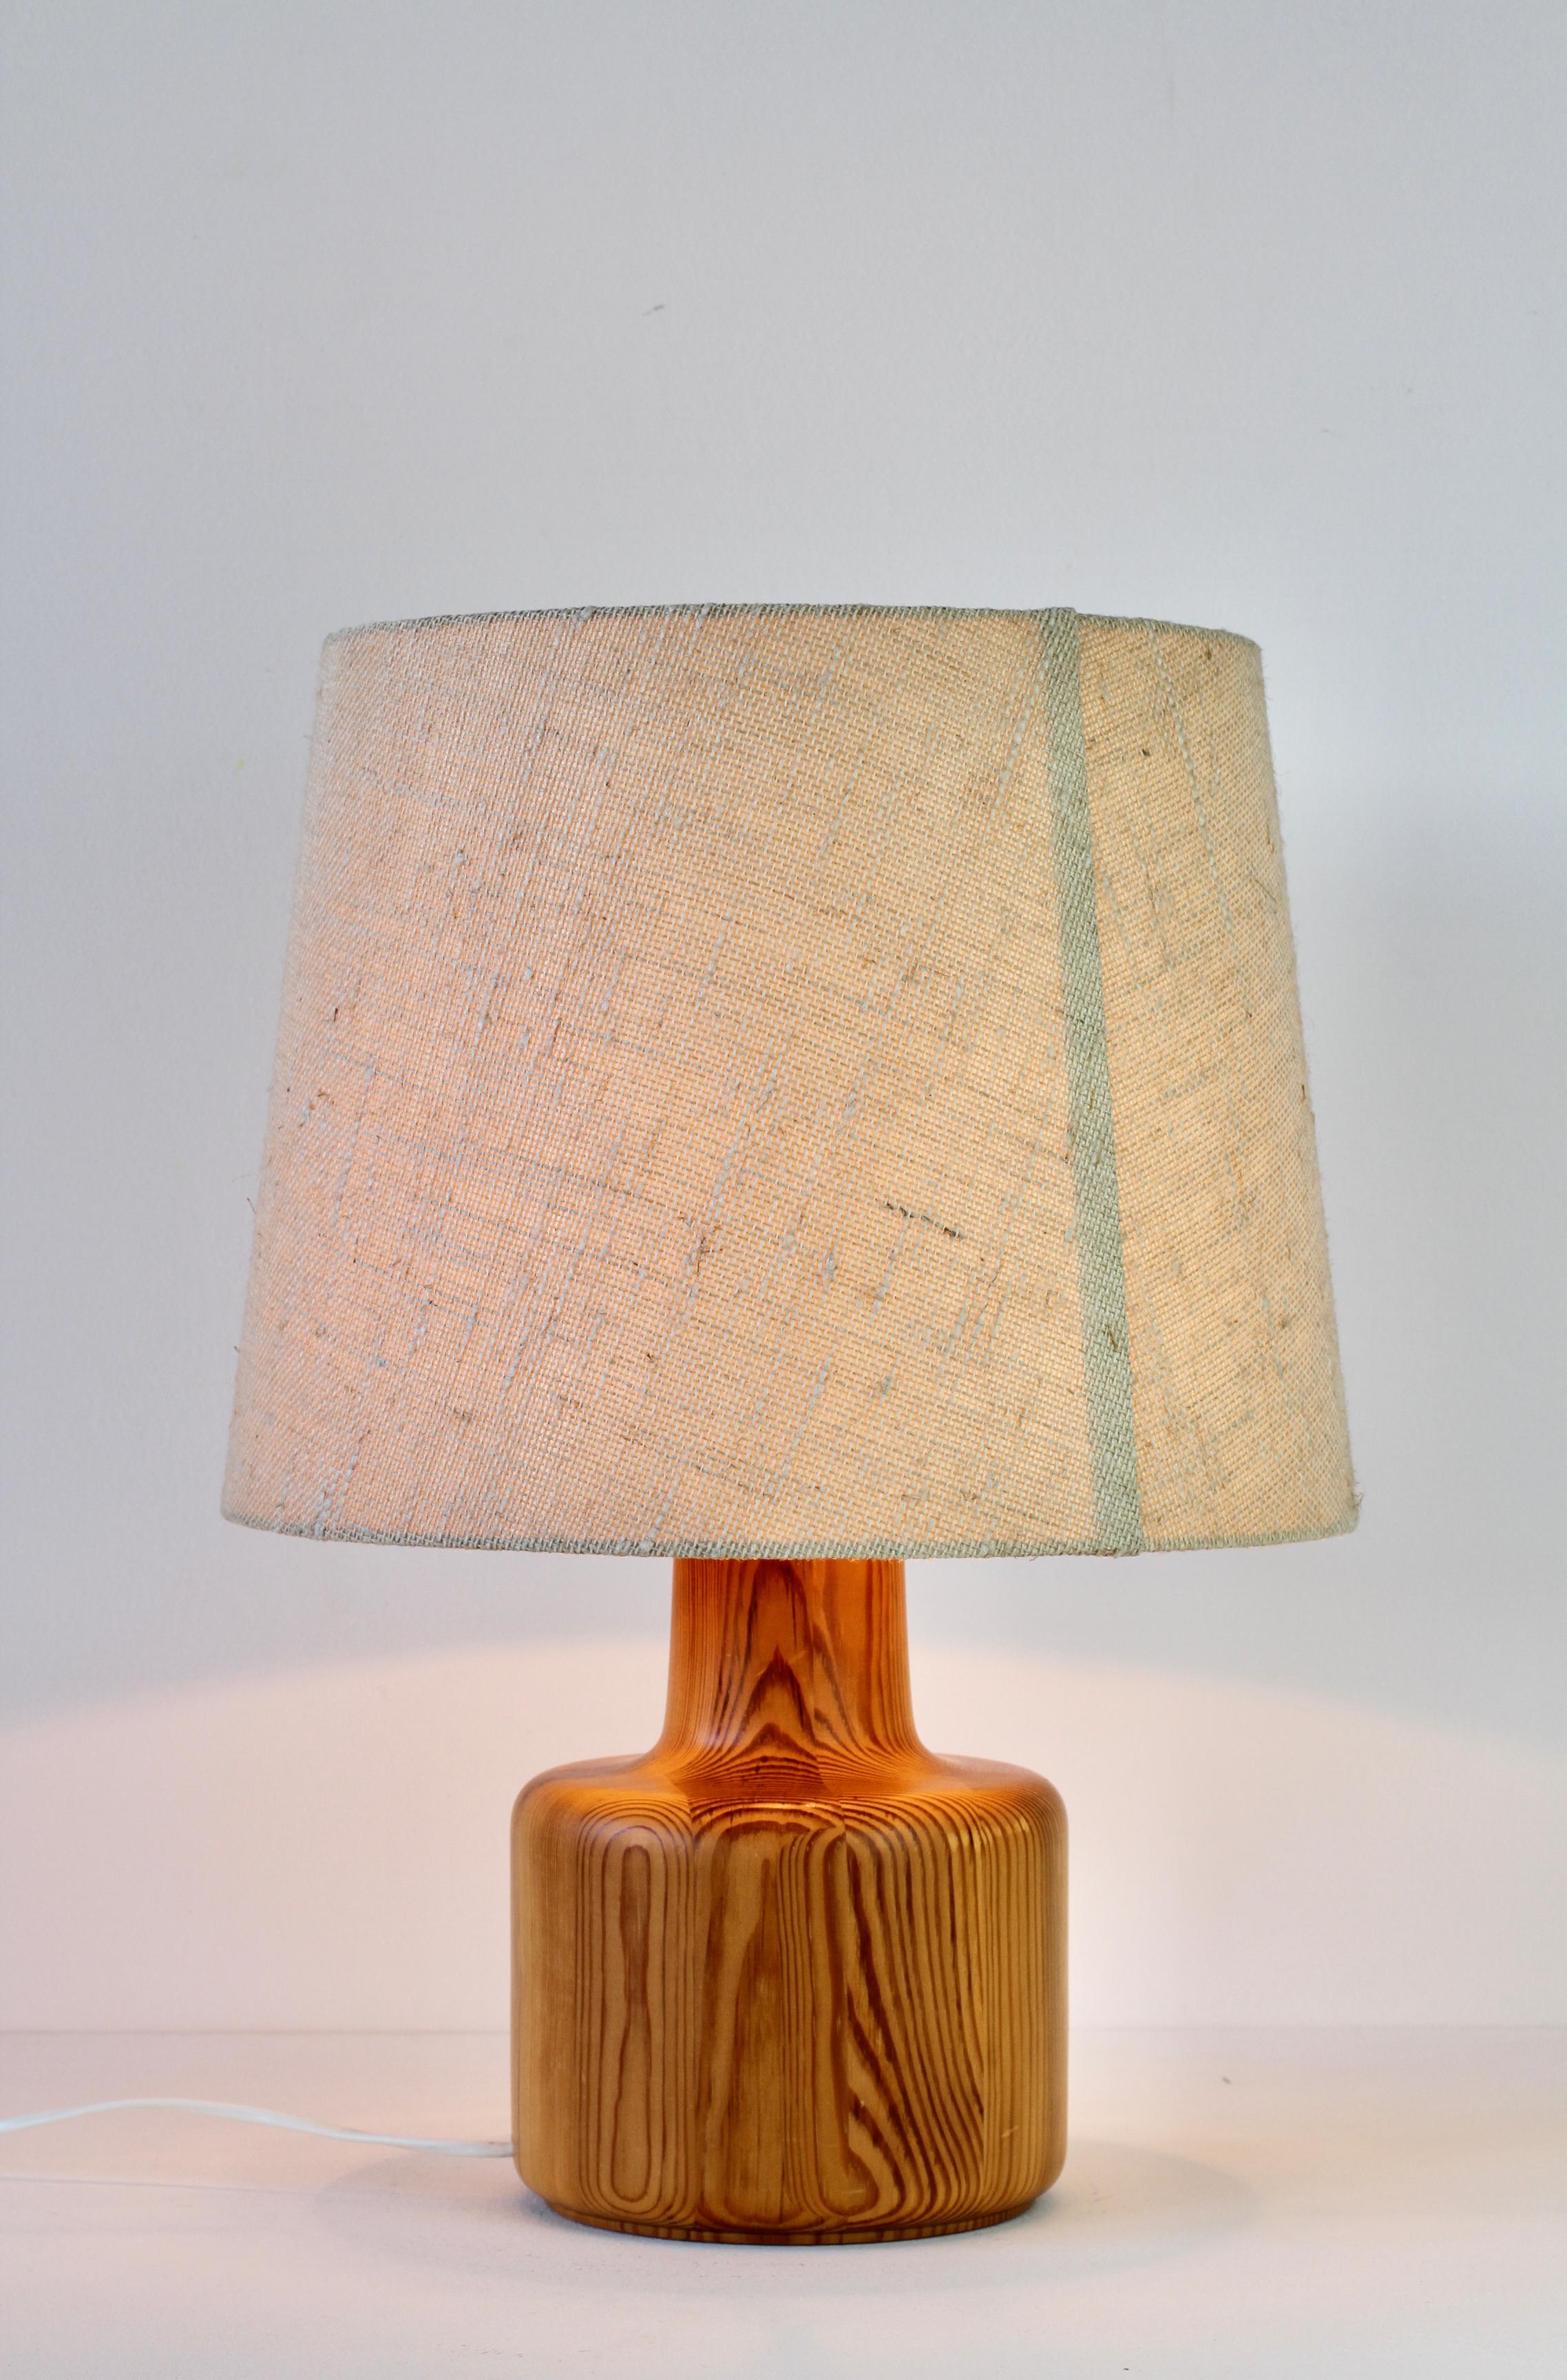 1970s Large Scandinavian Style Pine Wood Table Light Lamp Original Fabric Shade 4